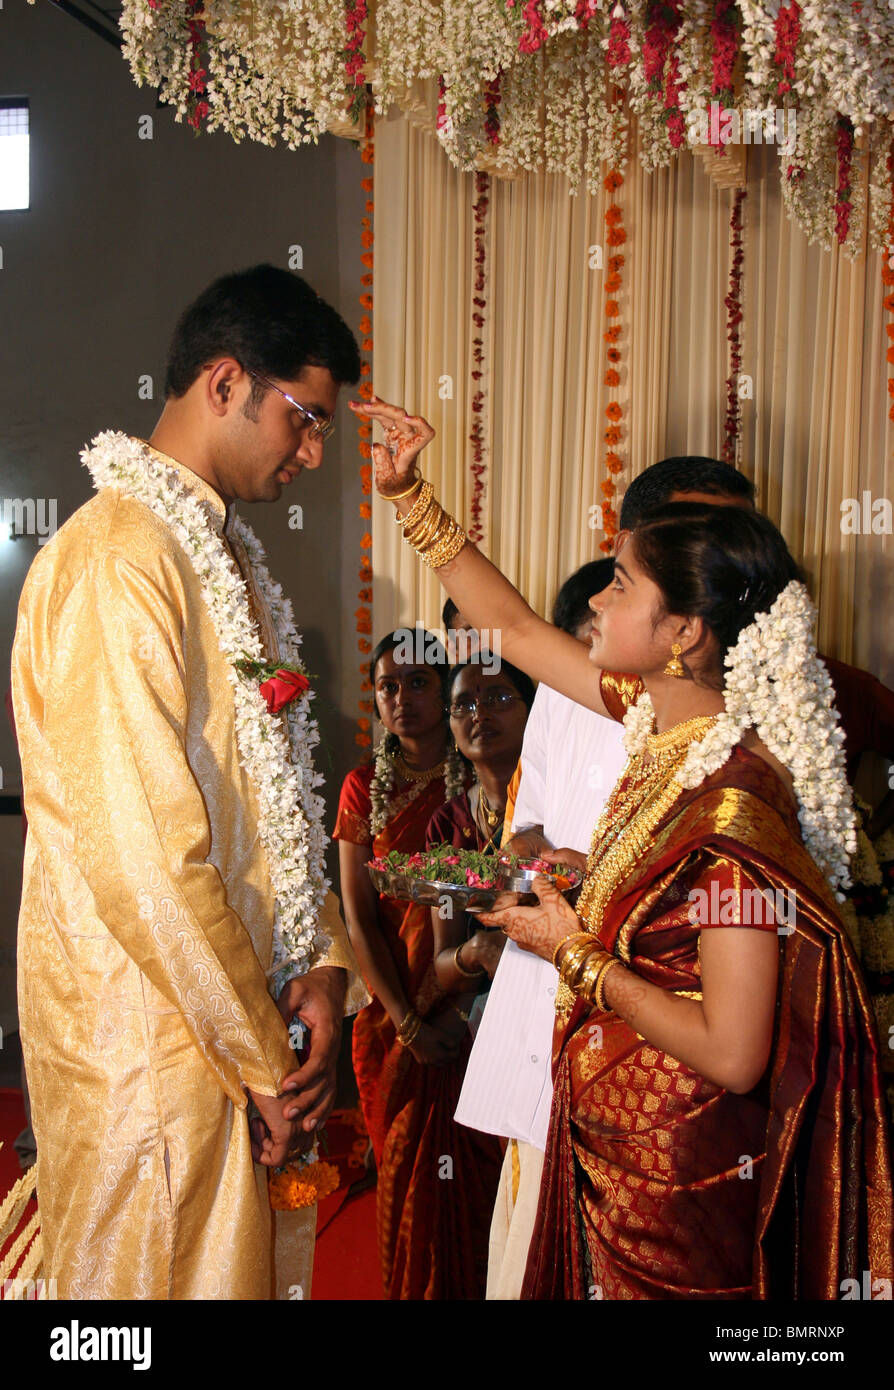 A hindu wedding ceremony in India. Stock Photo